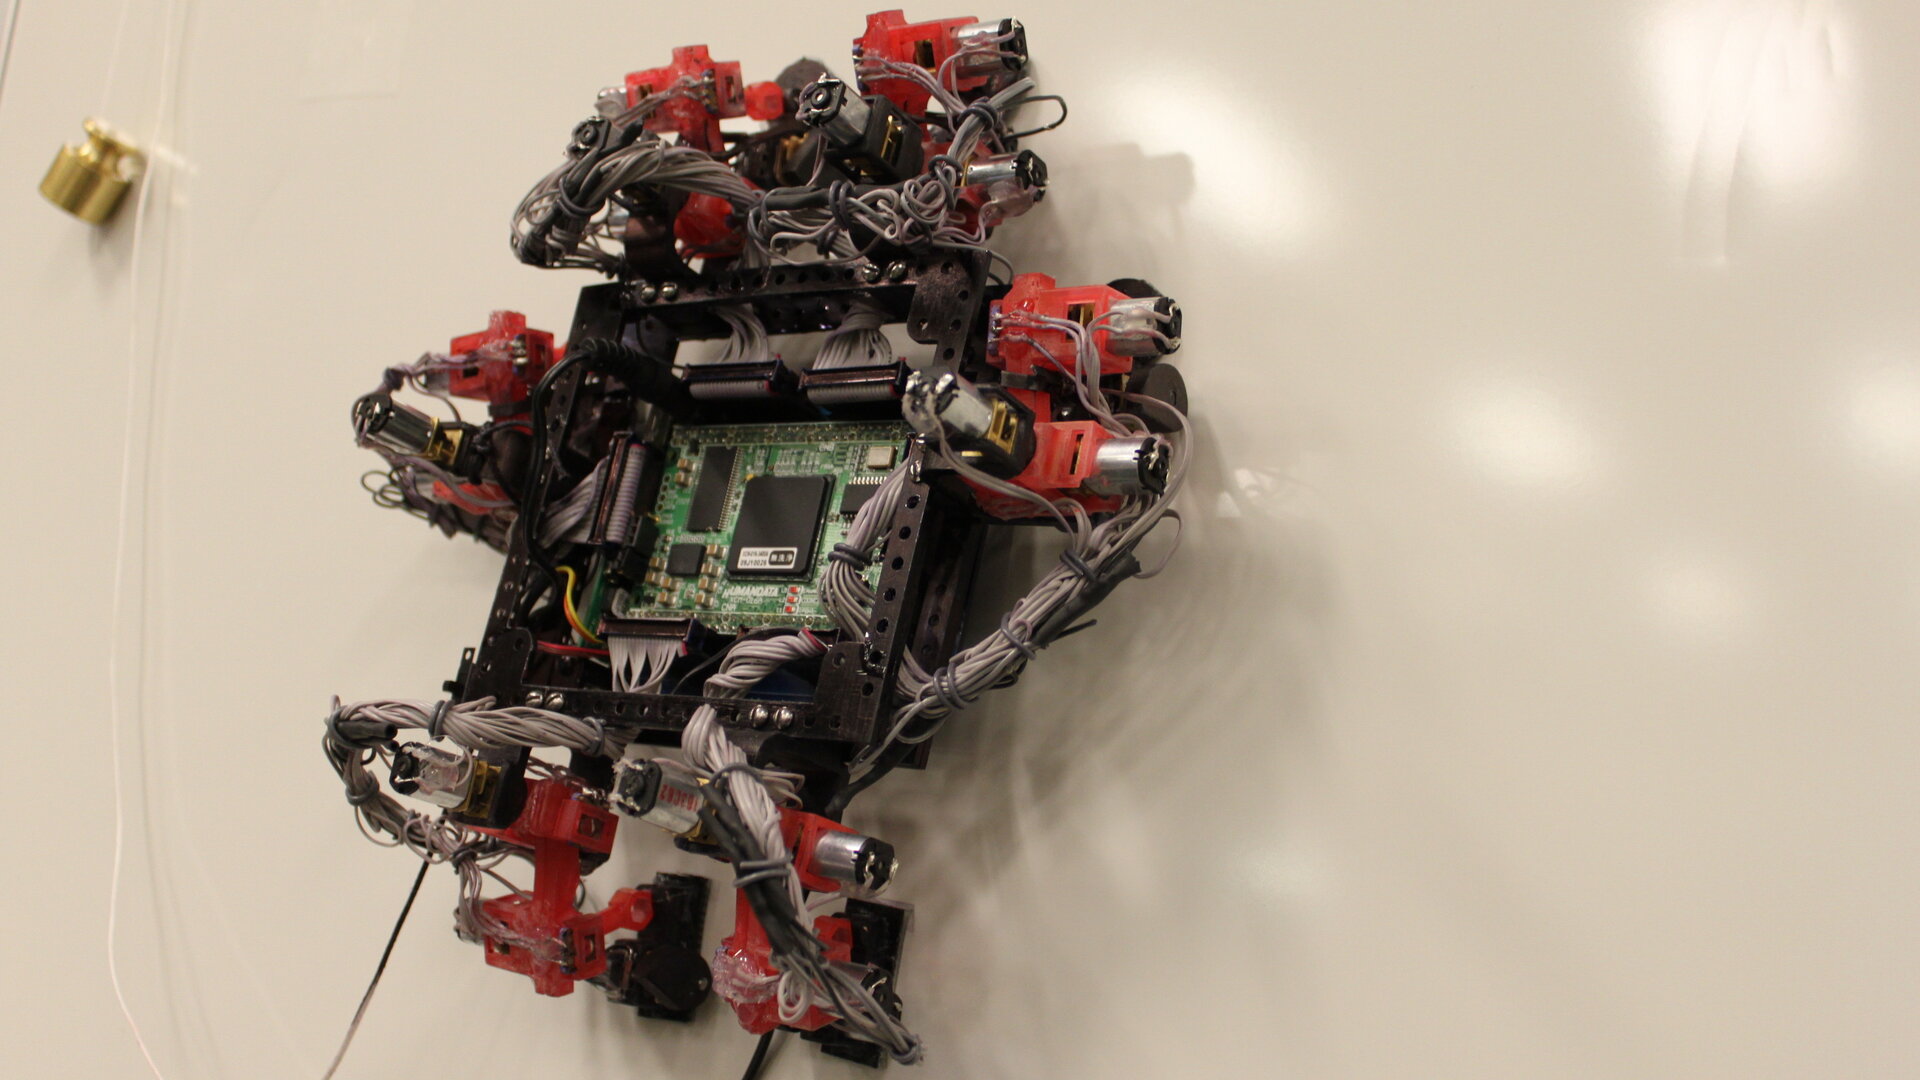 ‘Abigaille’ wall-crawler robot